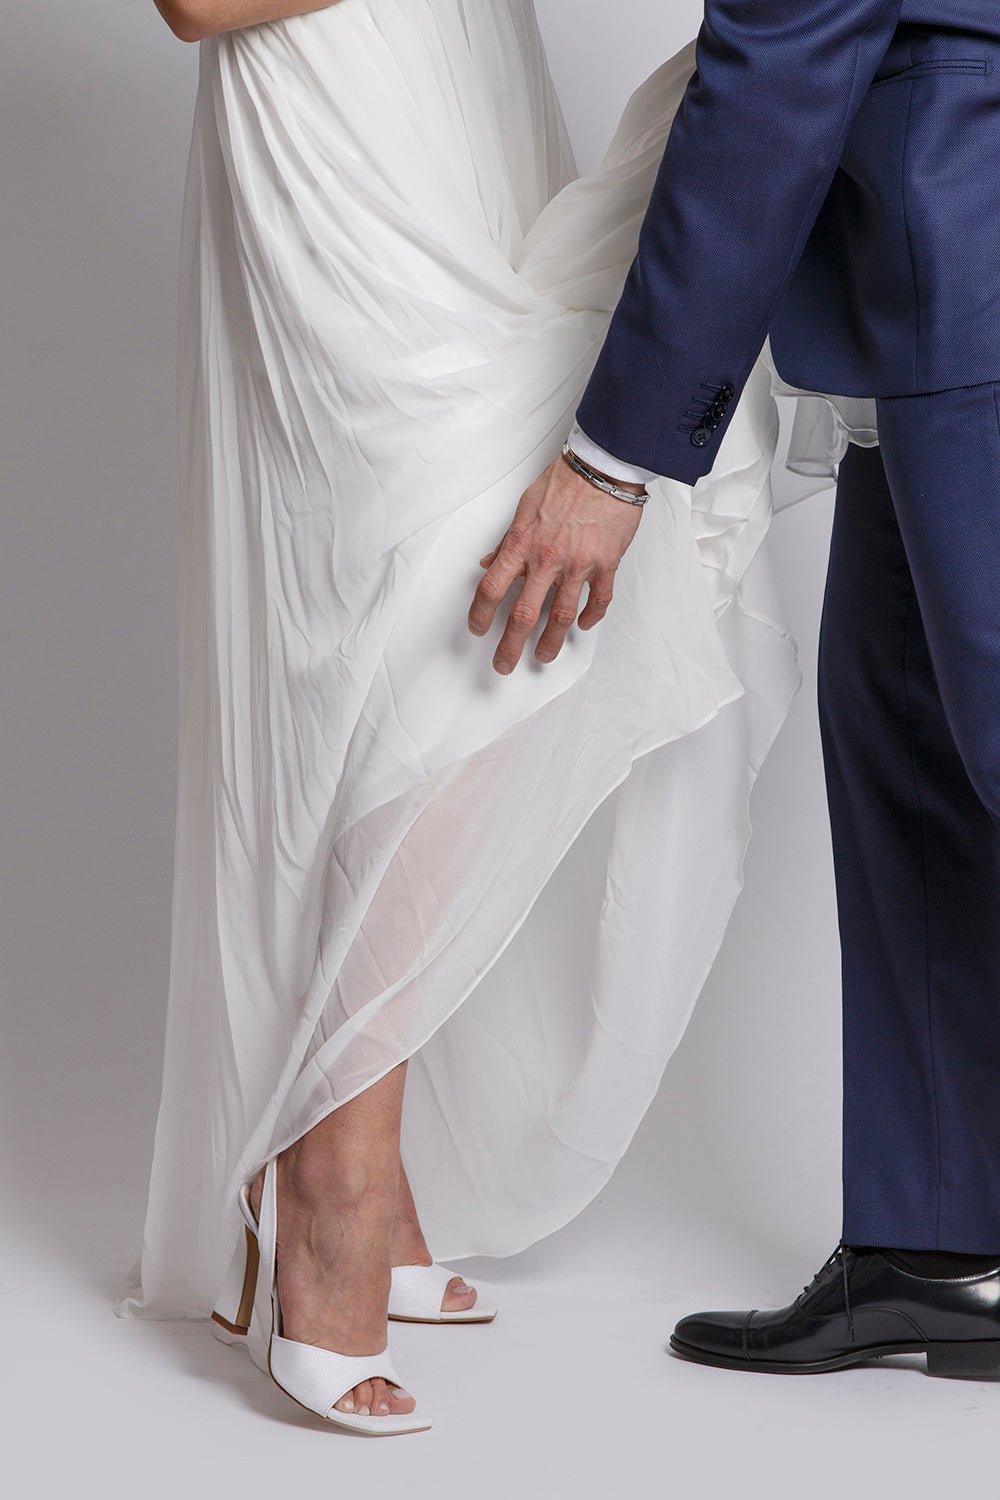 Sandalo Sposa in glitter bianco. - TreemmeCreazioni